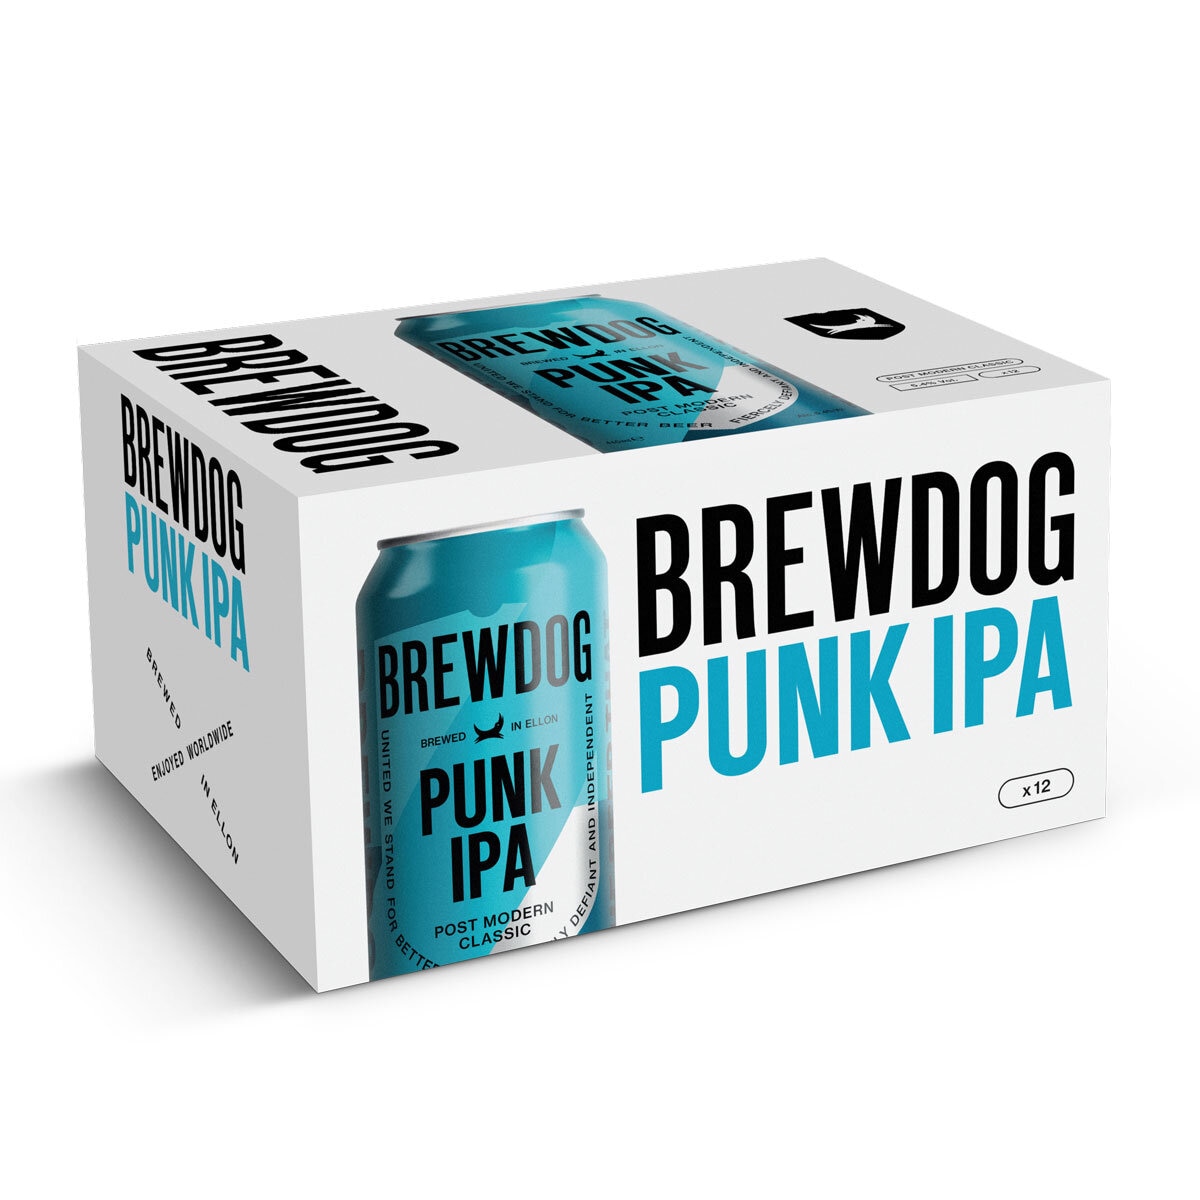 Brewdog Punk IPA, 12 x 440ml